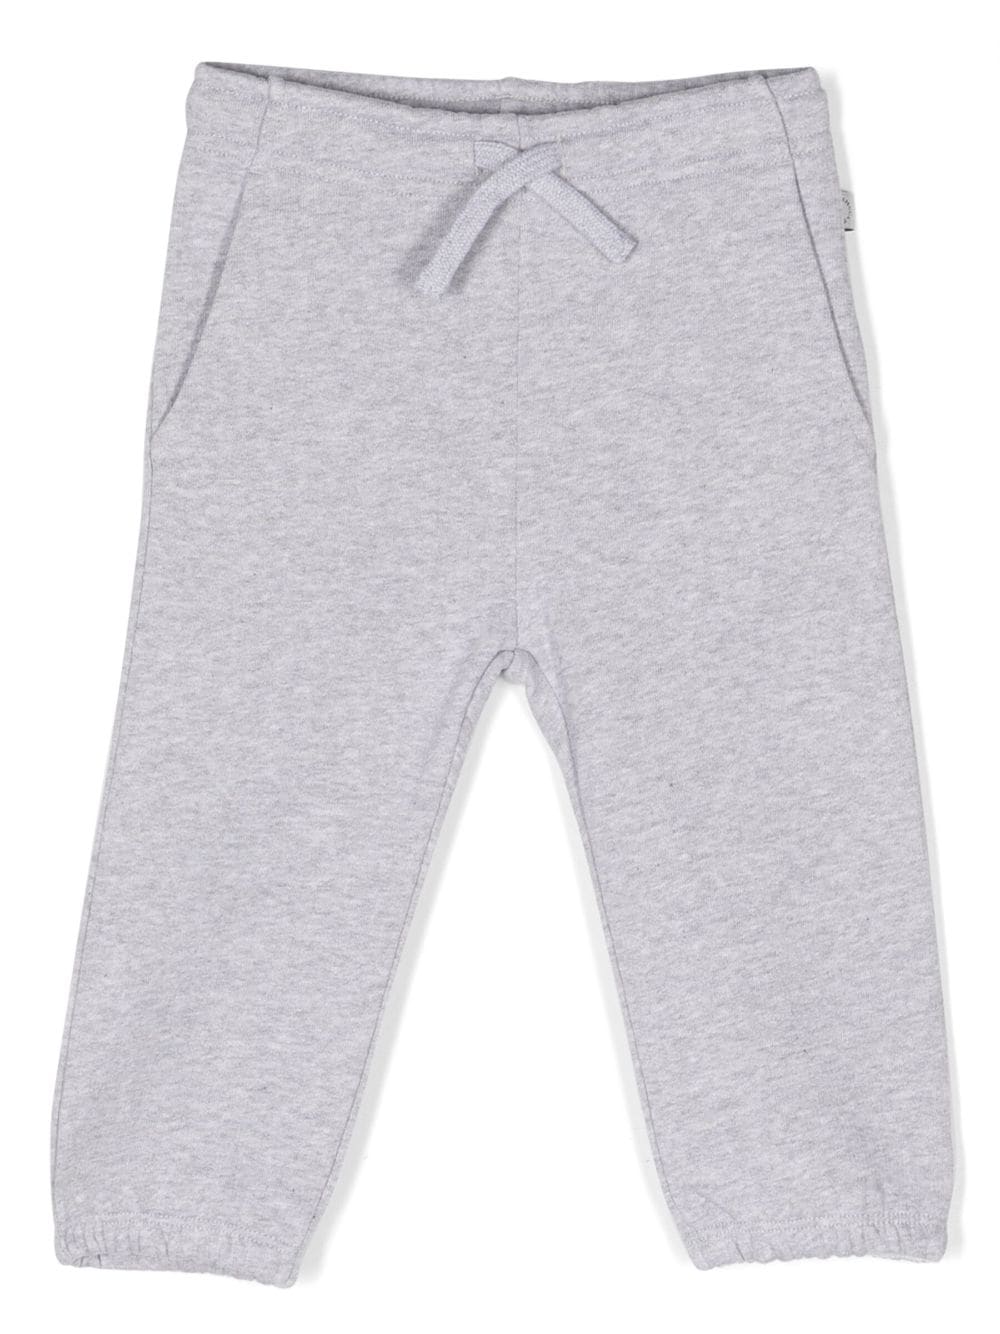 Stella McCartney Kids cotton track pants - Grey